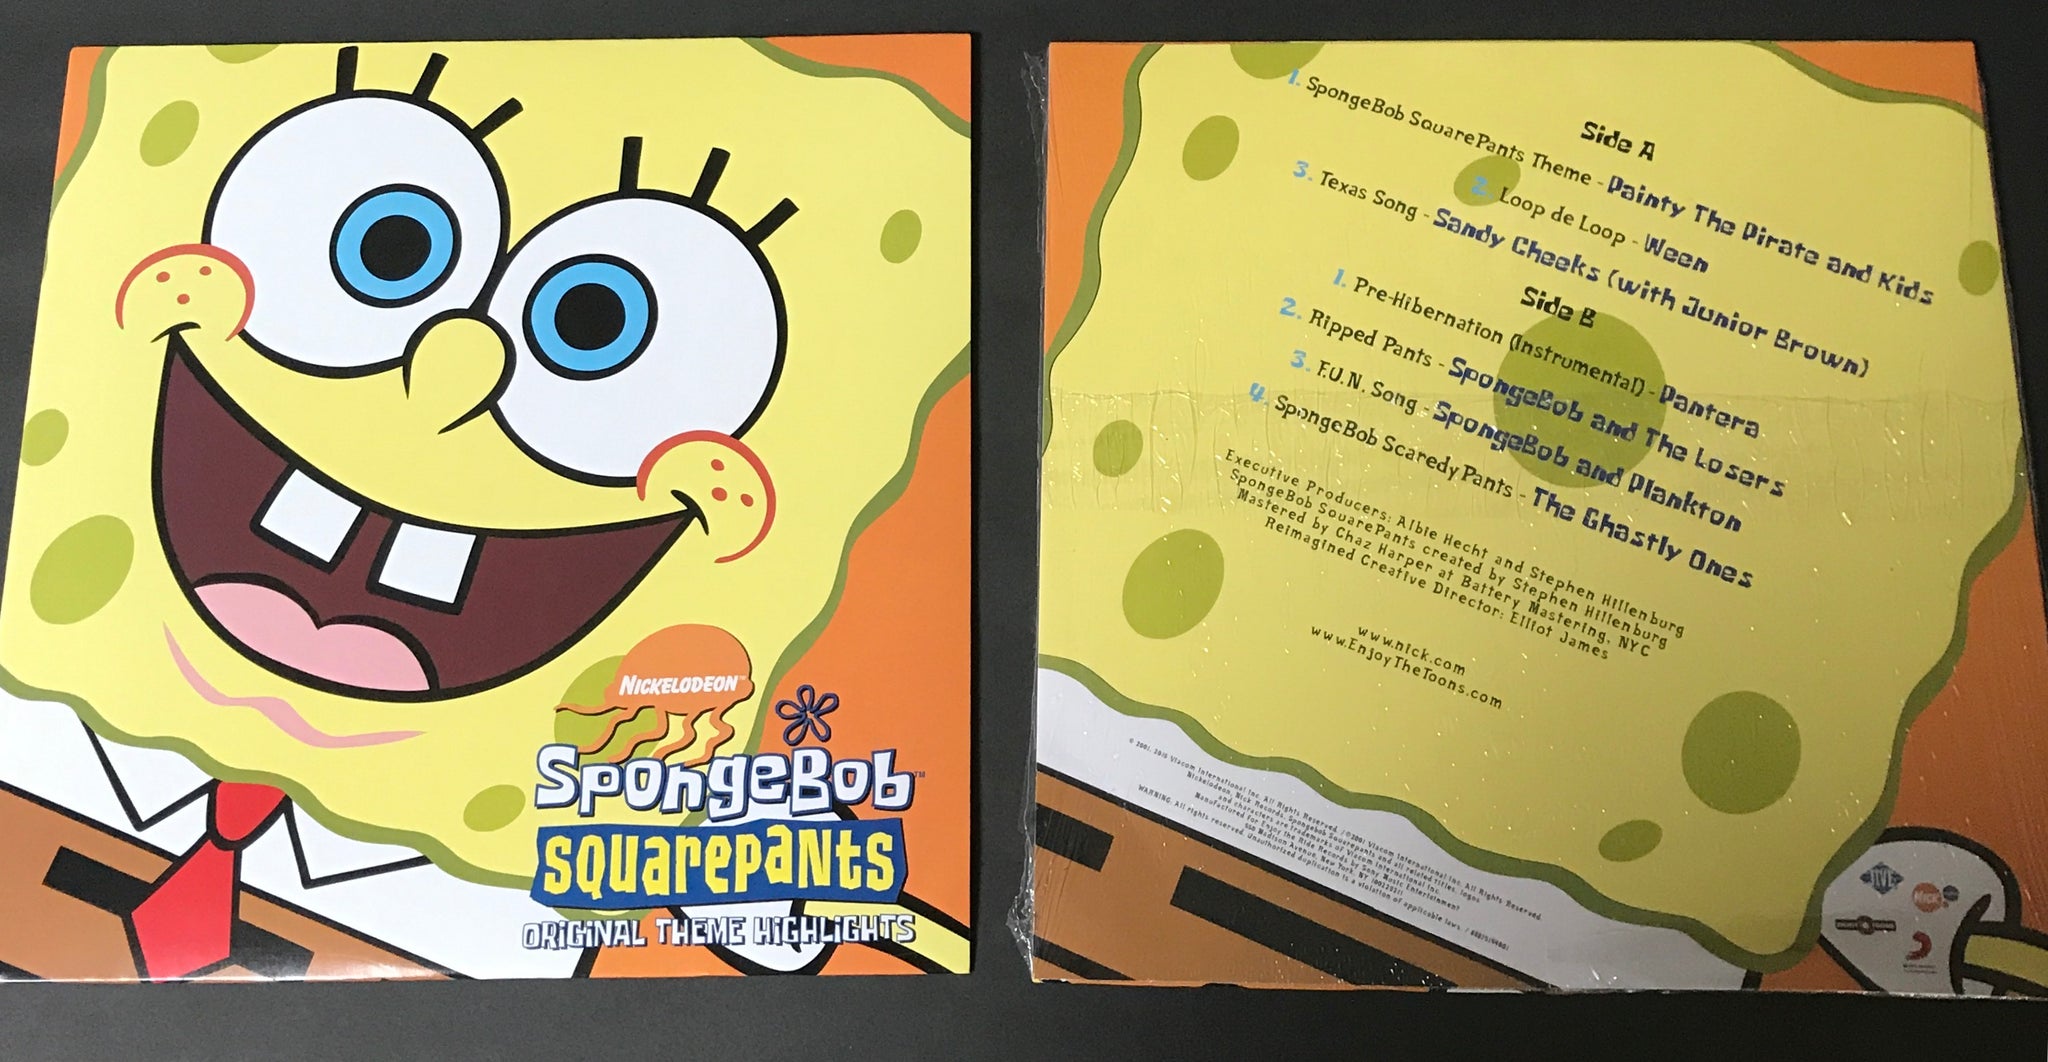 Spongebob Loop De Loop Mp3 Download - Colaboratory